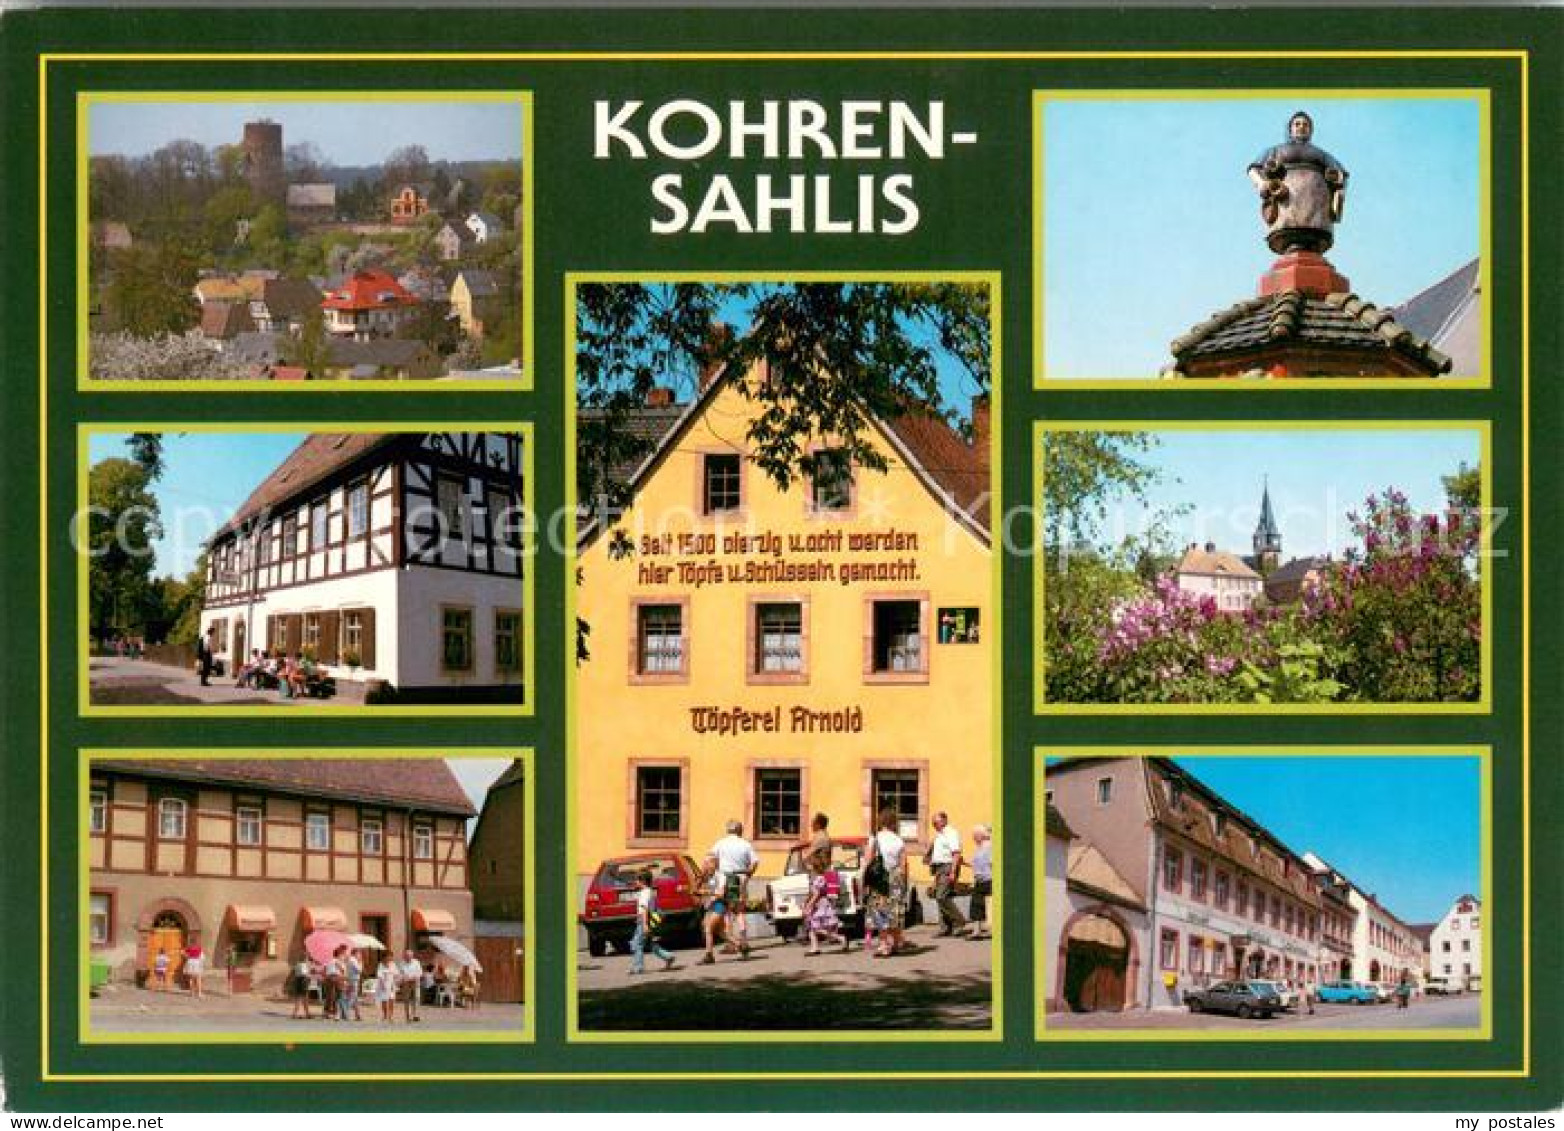 73660919 Kohren-Sahlis Ortsansichten Toepferei Arnold Kohren-Sahlis - Kohren-Sahlis